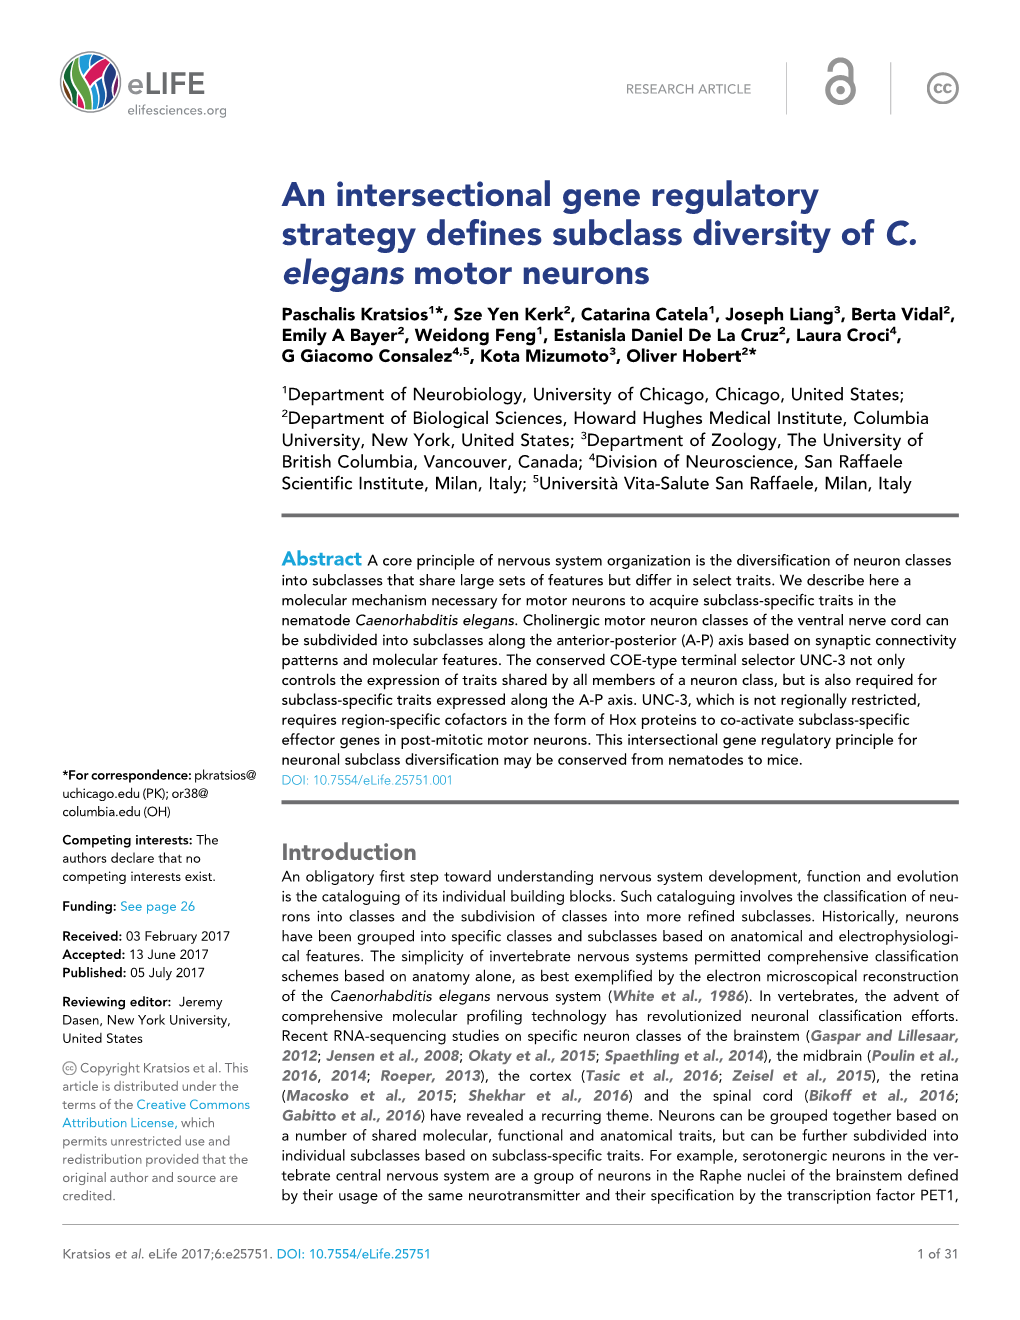 An Intersectional Gene Regulatory Strategy Defines Subclass Diversity of C